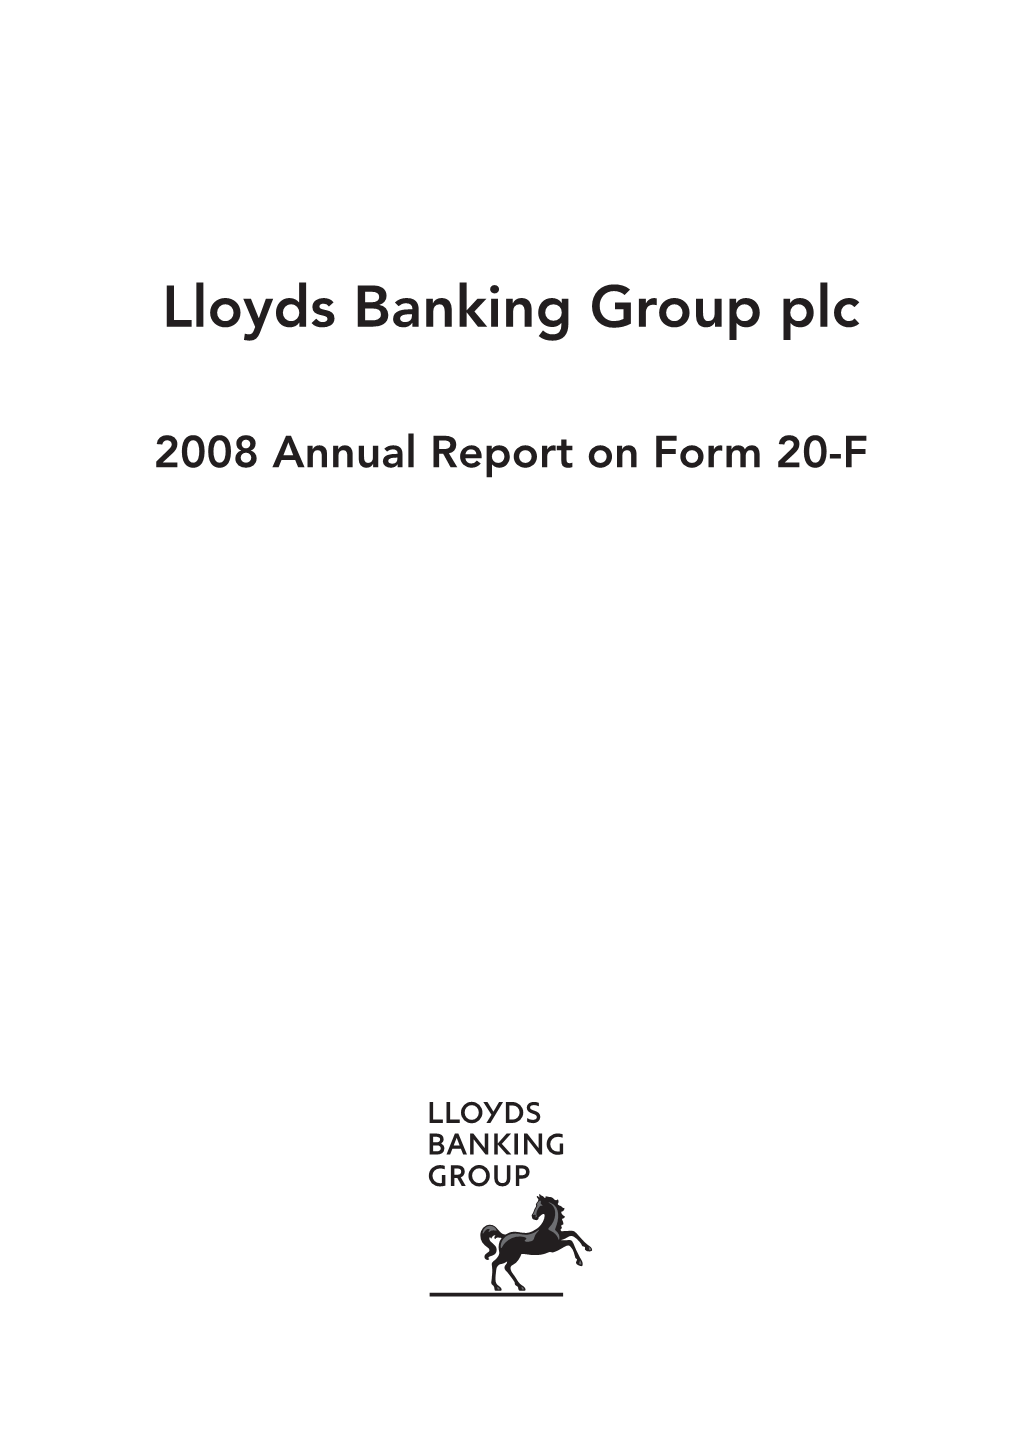 Form 20F (SEC Filing) 2008